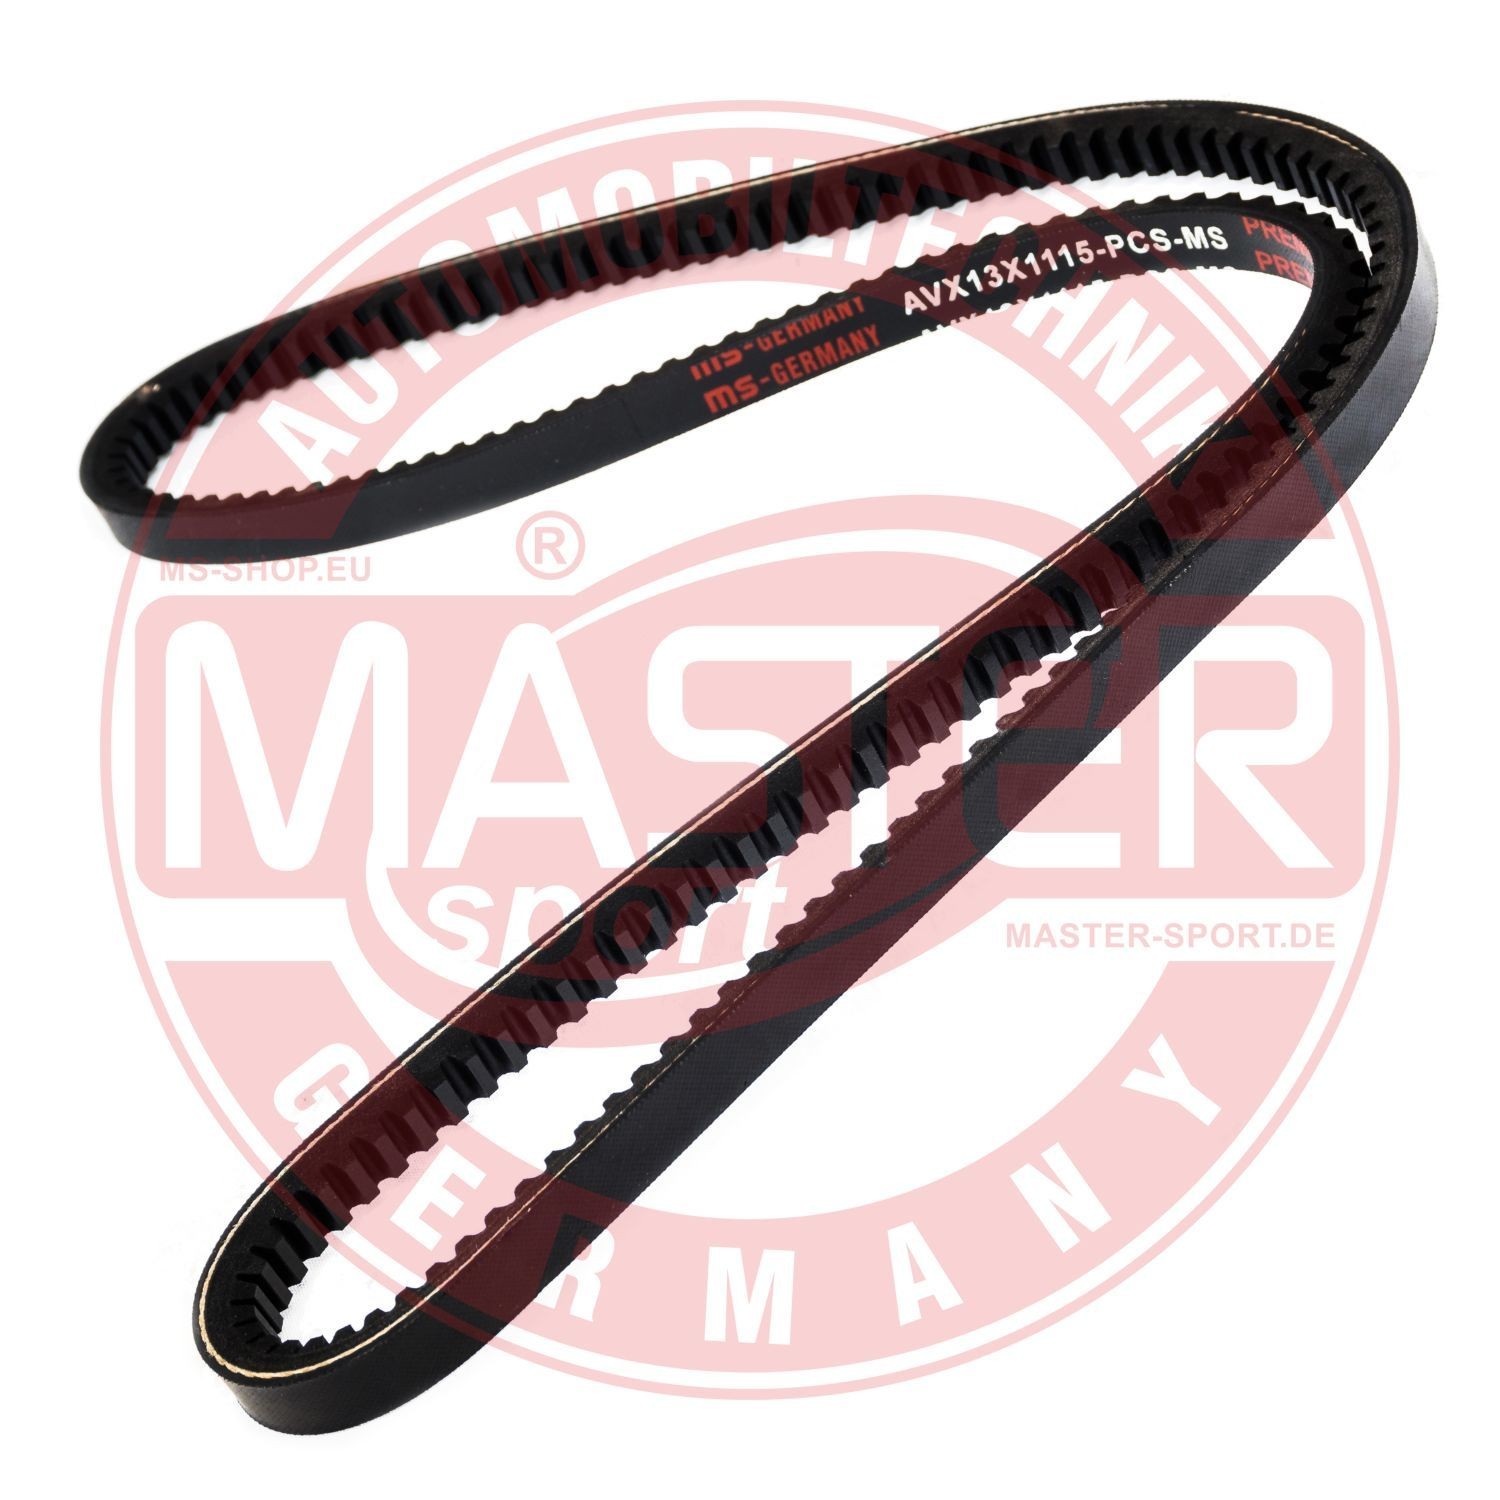 13X1110 MASTER-SPORT Length: 1115mm Vee-belt AVX-13X1115-PCS-MS buy